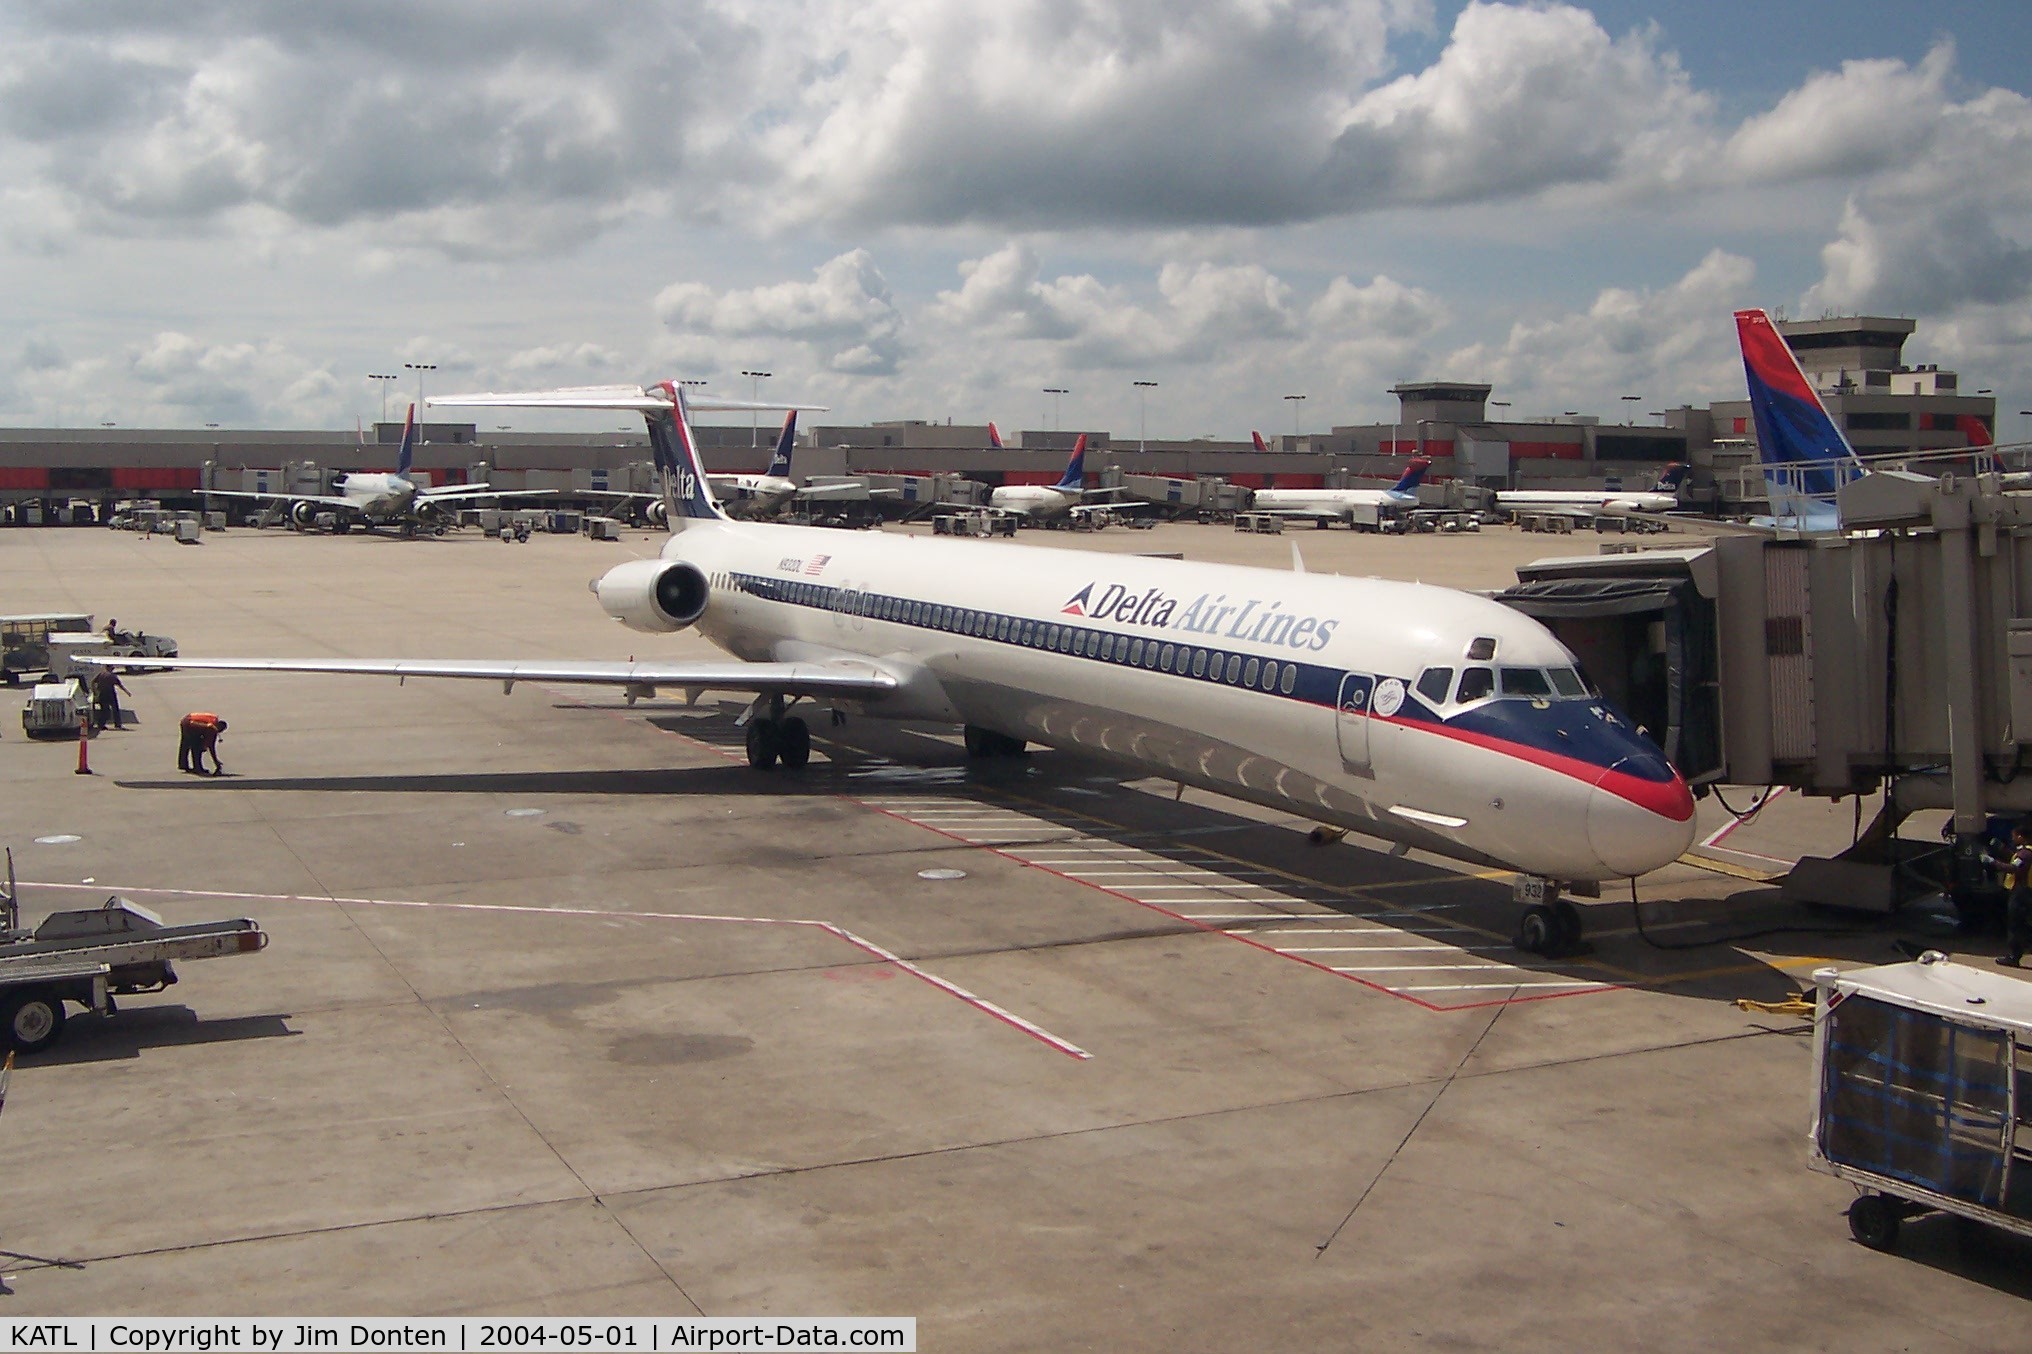 Hartsfield - Jackson Atlanta International Airport (ATL) - A Delta MD-88 at the gate at Hartsfield-Jackson